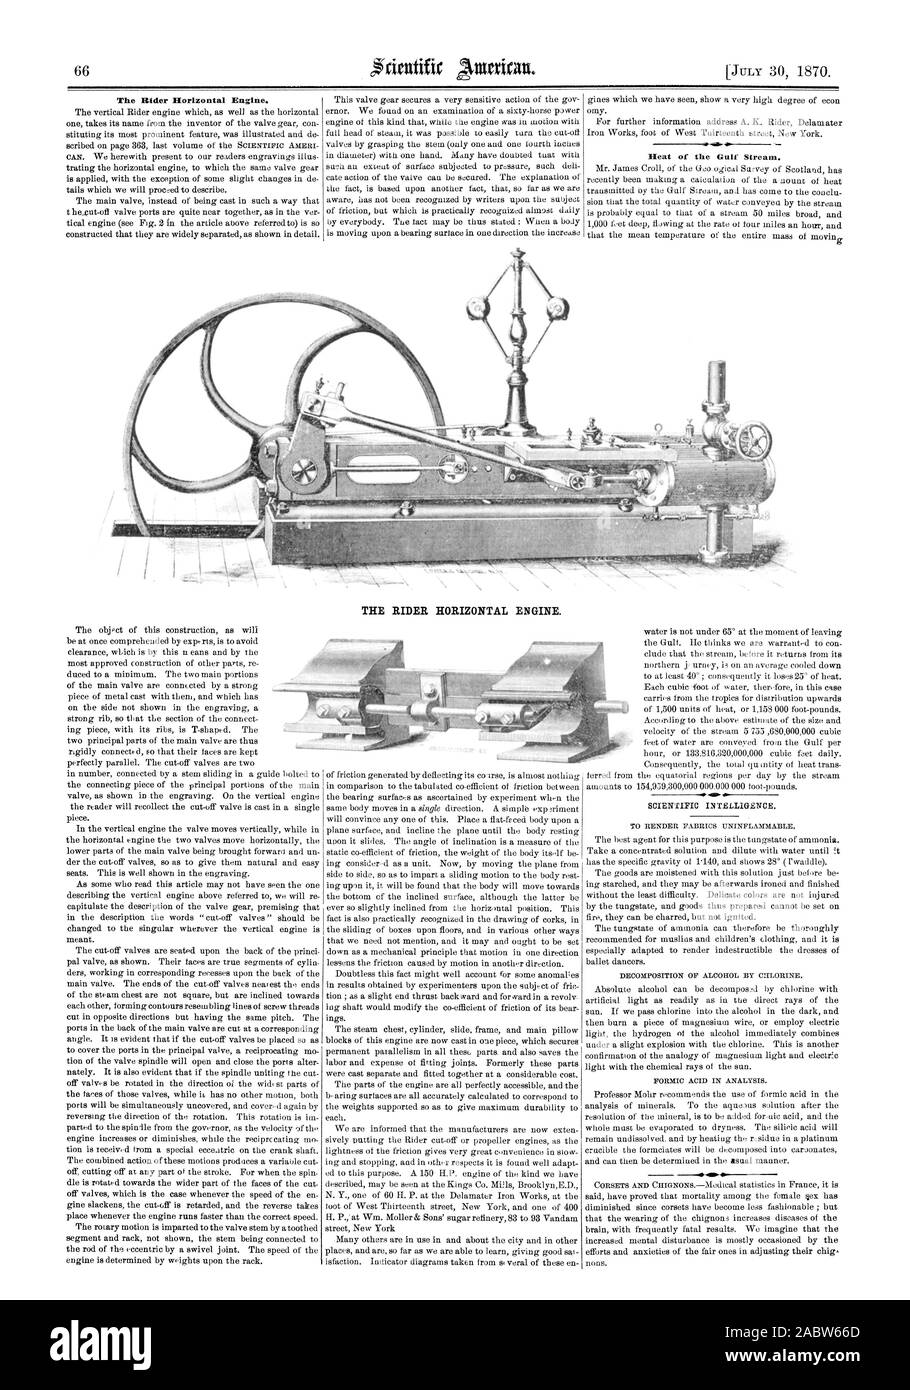 The rider horizontal engine, scientific american, 1870-07-30 Stock Photo